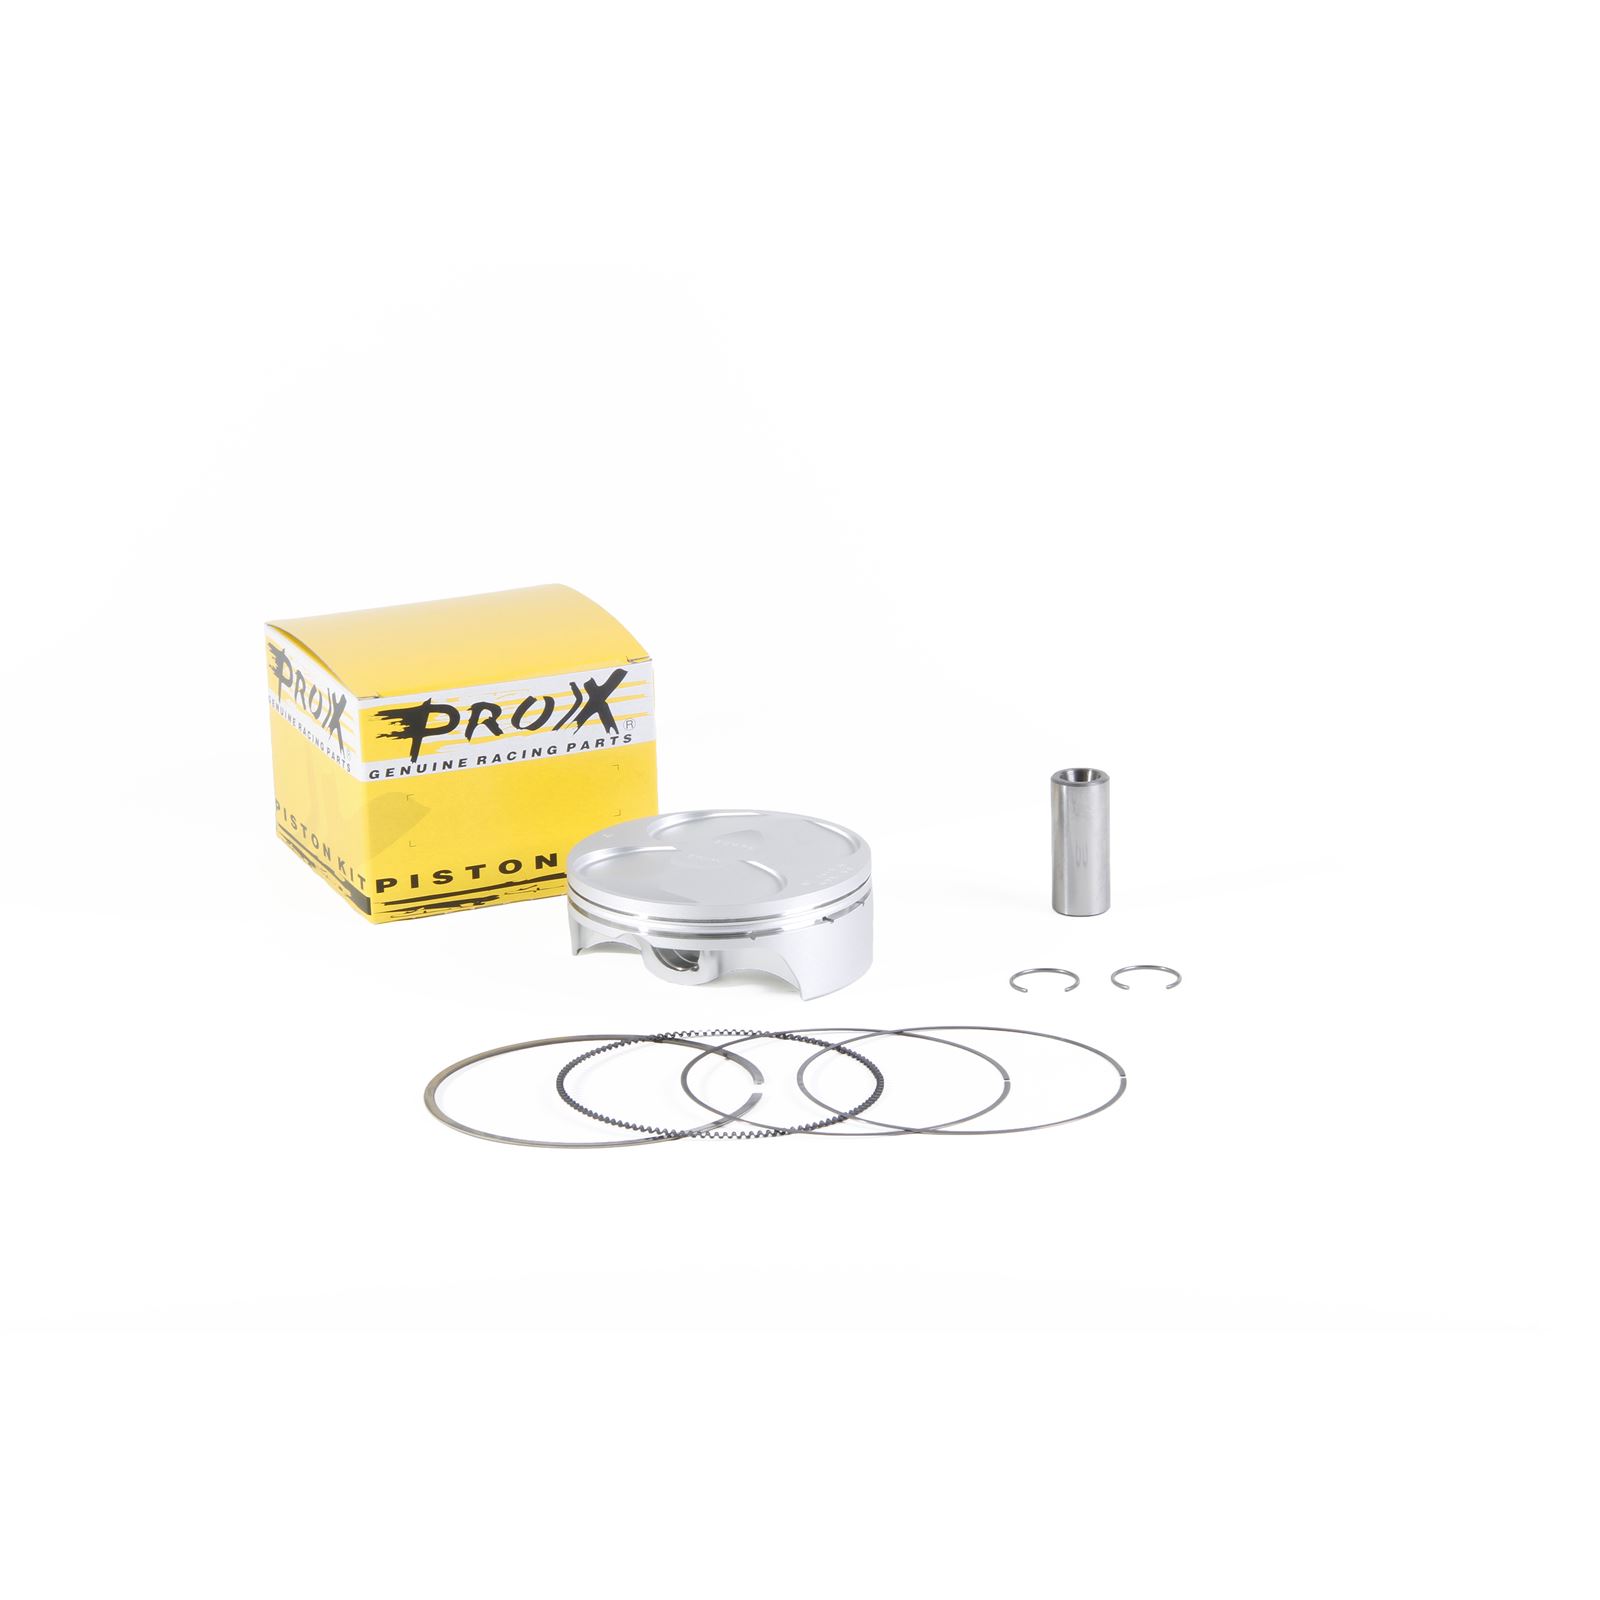 Prox Racing Parts 01.1498.200 92.00mm 4-Stroke Piston Kit 